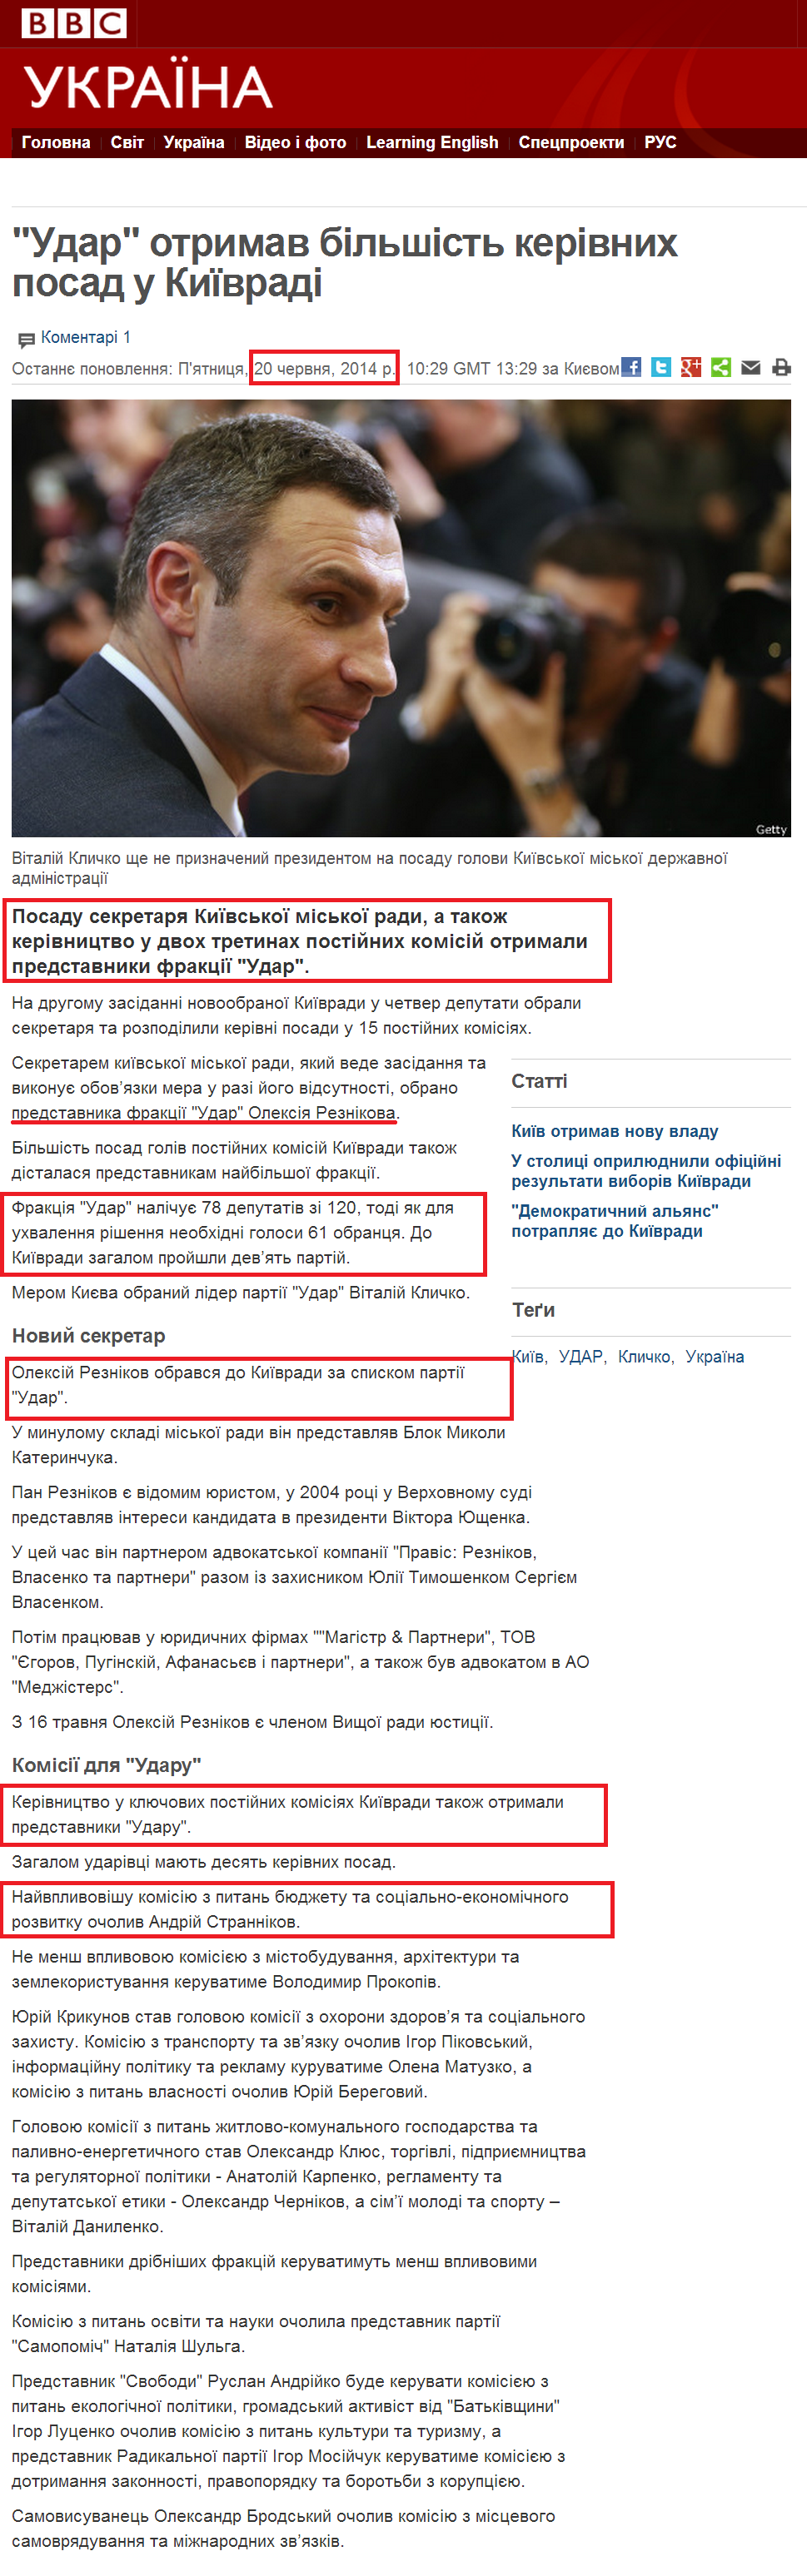 http://www.bbc.co.uk/ukrainian/politics/2014/06/140620_kyiv_council_heads_vc.shtml